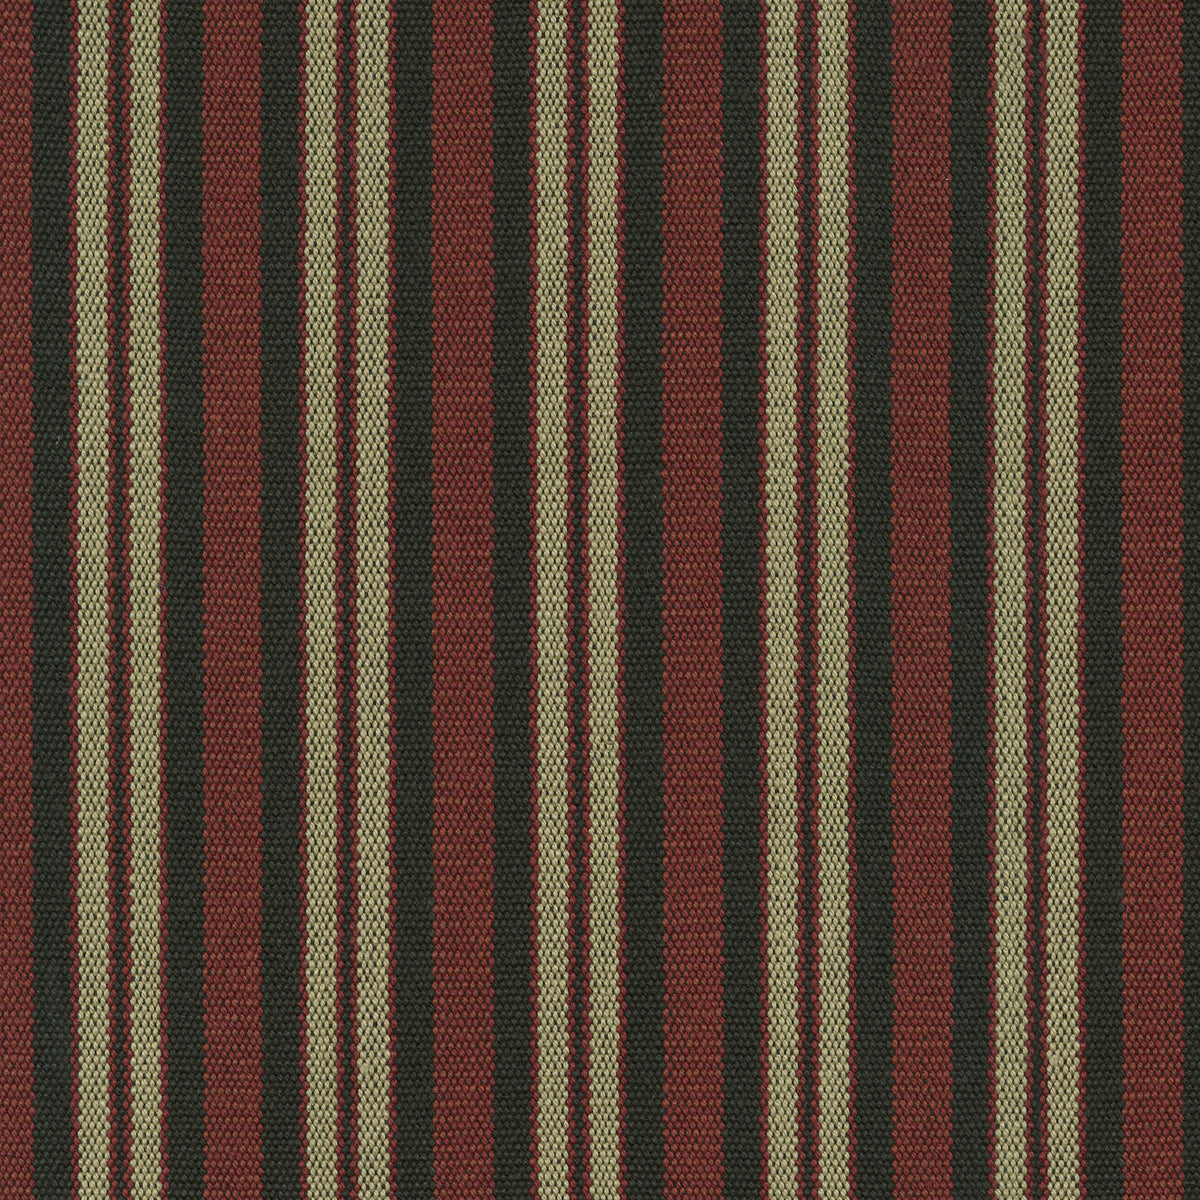 P/K Lifestyles Silverton Stripe - Cardinal 411691 Upholstery Fabric